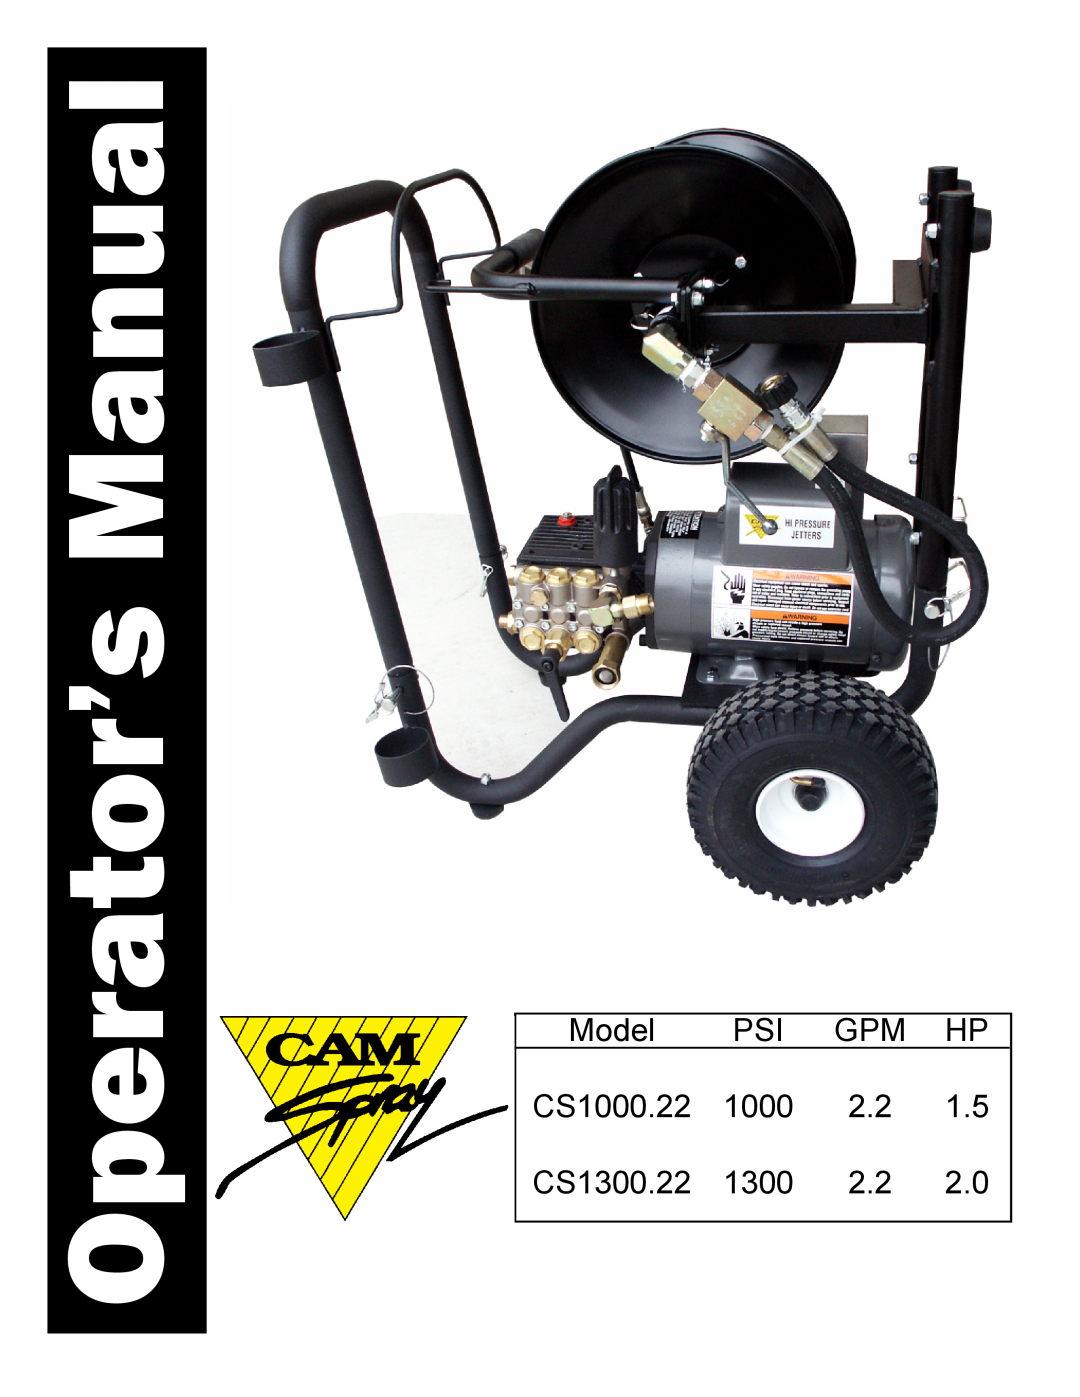 S-Cam manual Operator’s Manual, Model PSI GPM HP CS1000.22 1000 2.2 CS1300.22 